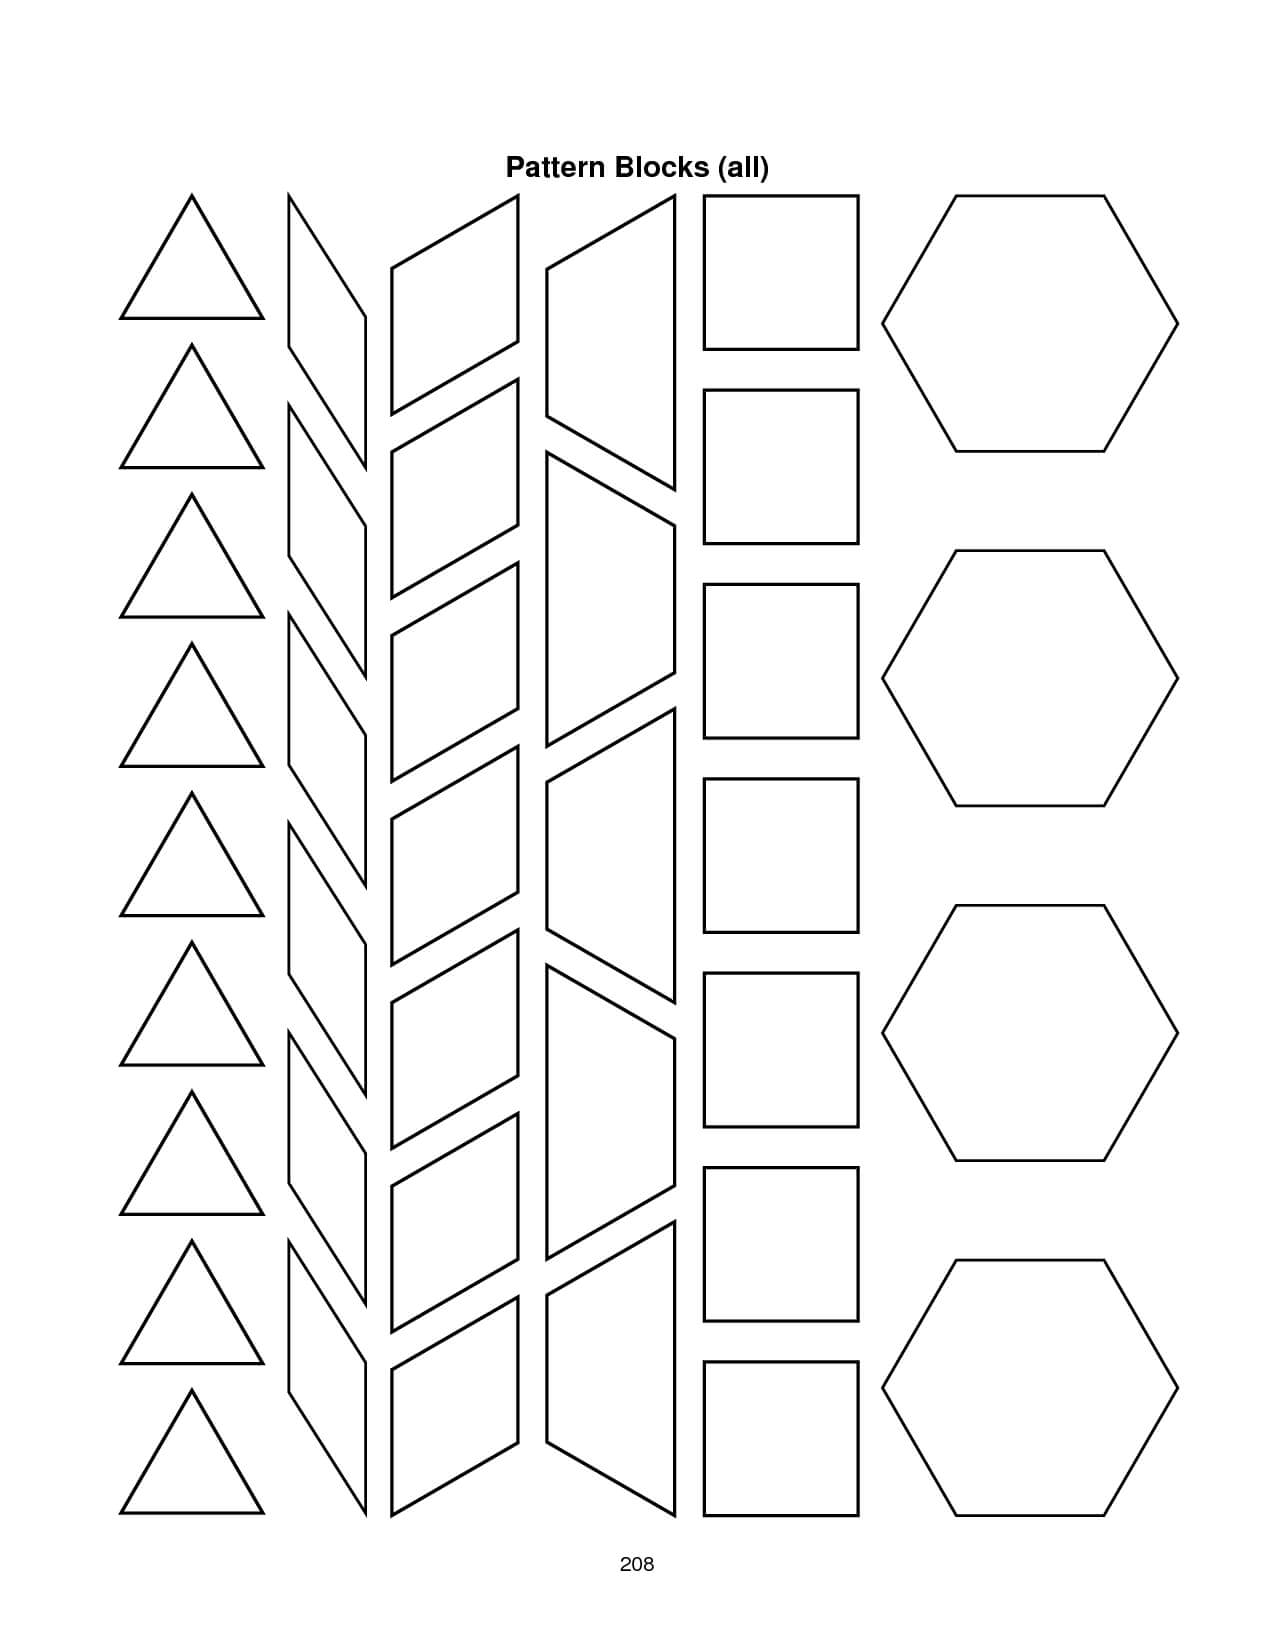 28 Images Of Blank Alphabet Pattern Block Template | Migapps Inside Blank Pattern Block Templates